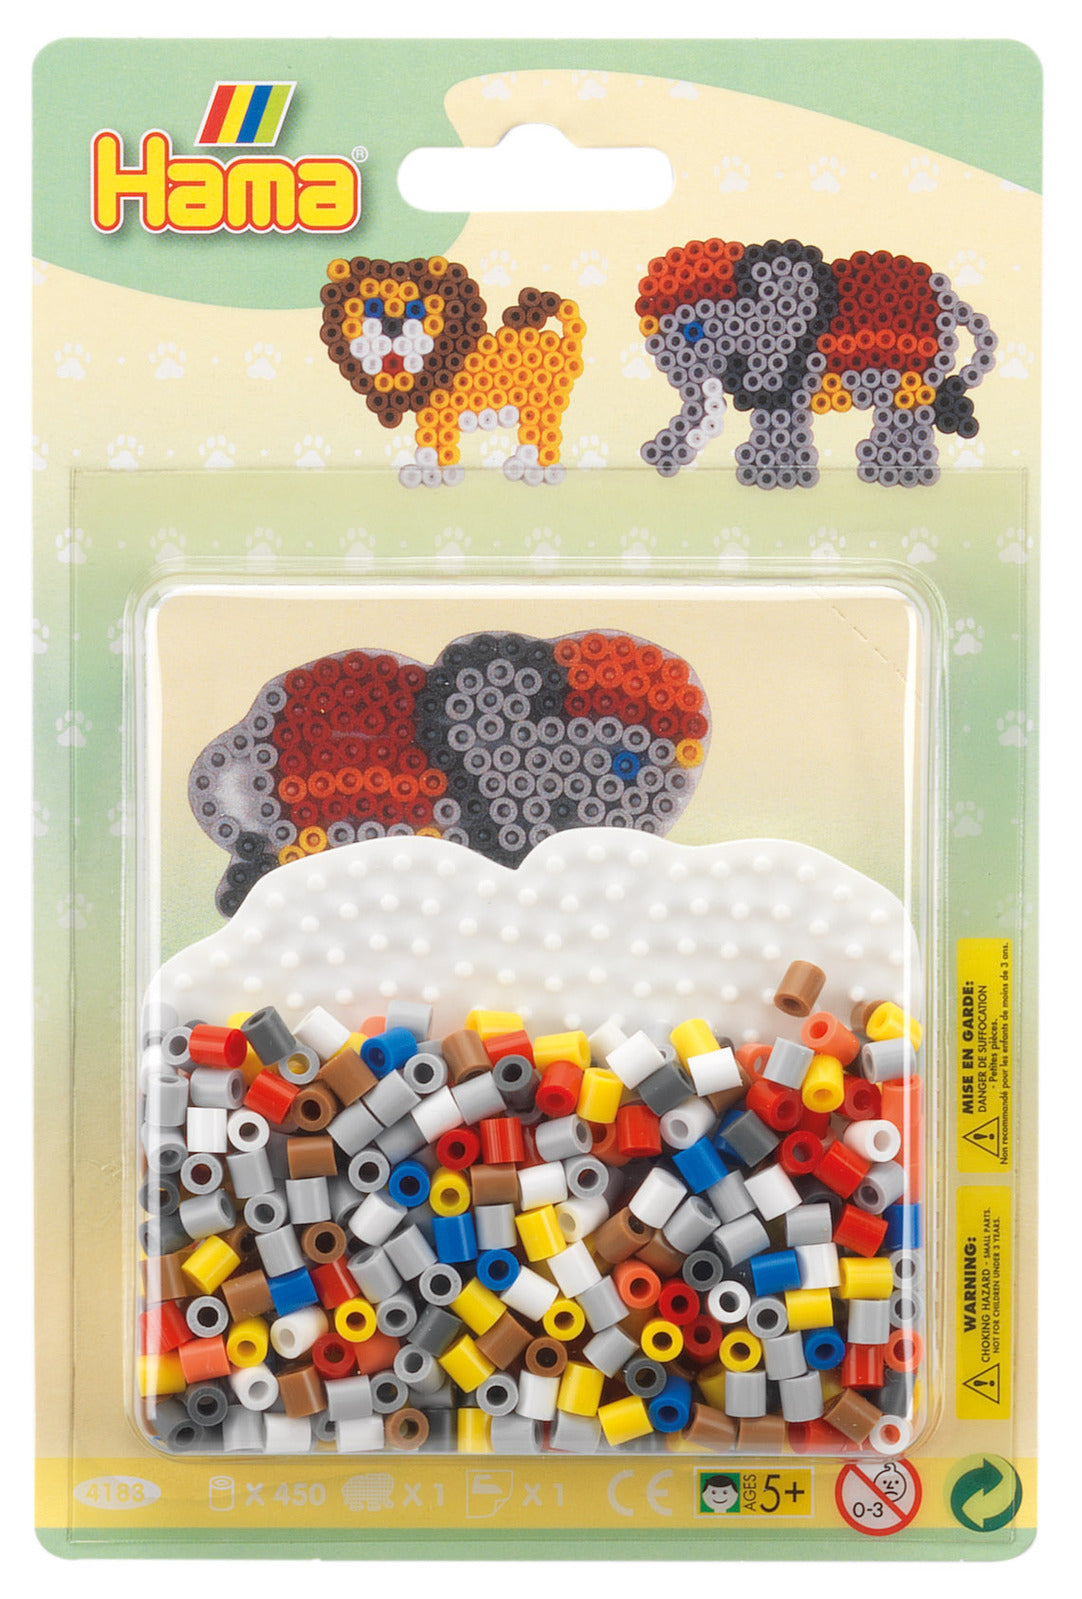 Hama Large Blister Pack approx 450 Beads - Hobbytech Toys